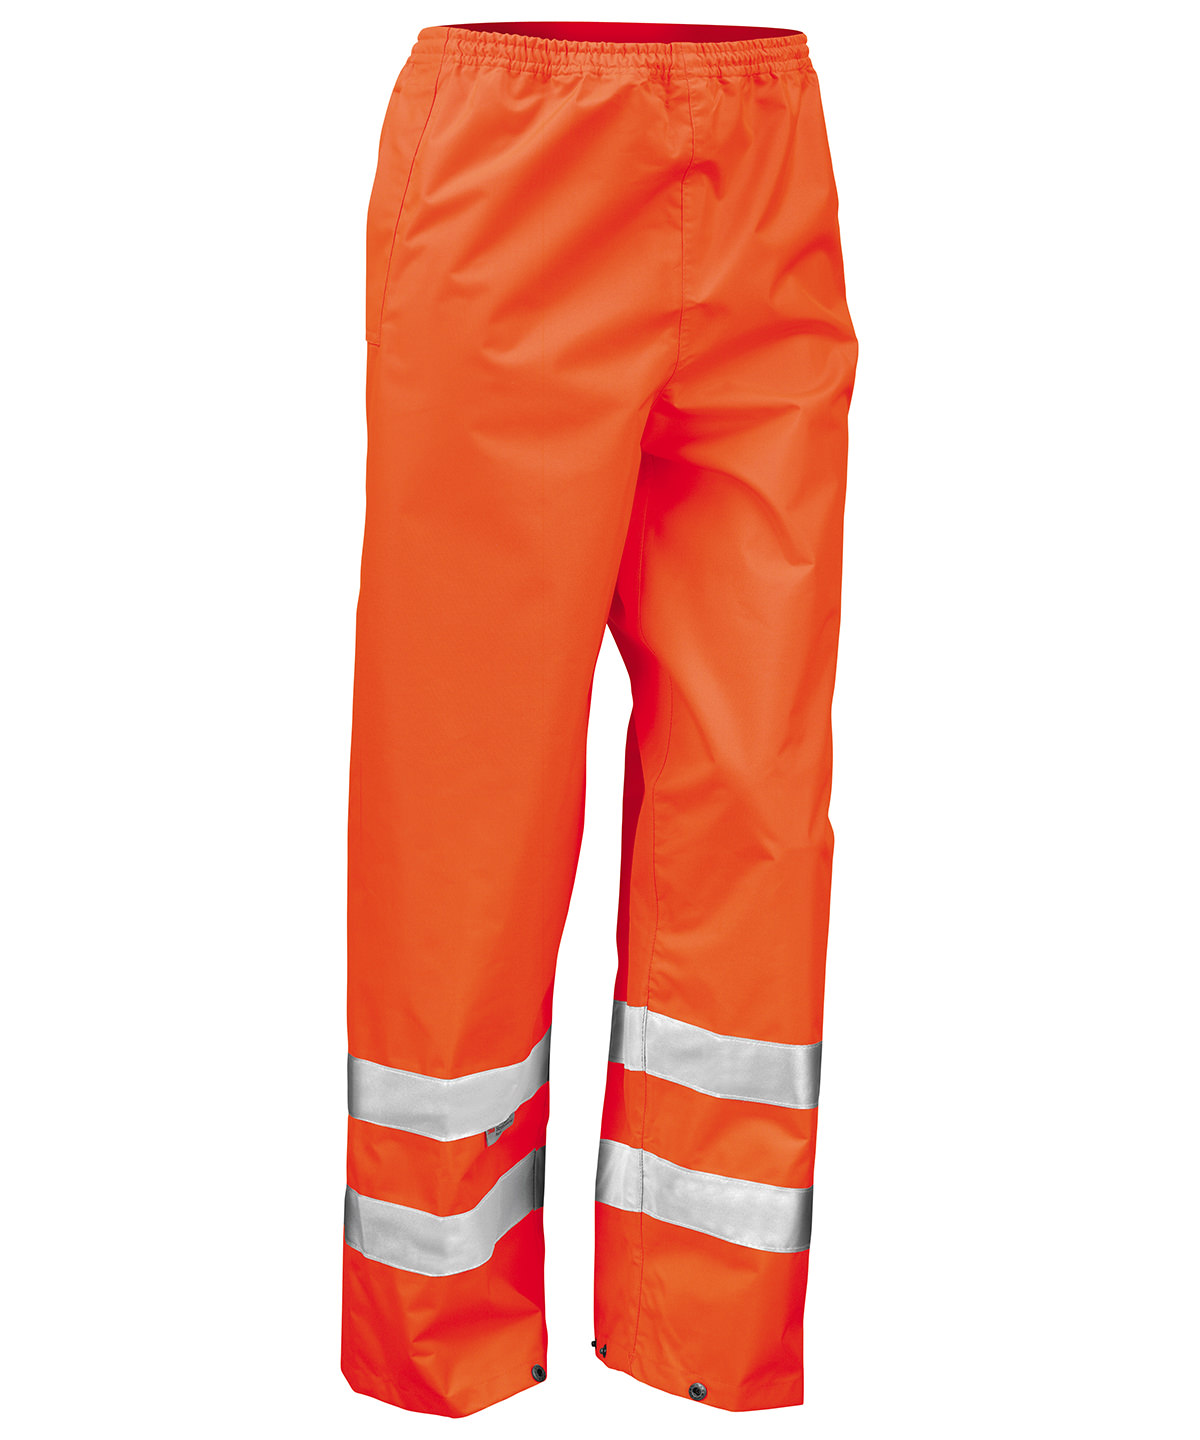 Safety High-Viz Trousers Fluorescent Orange Size Small/Medium